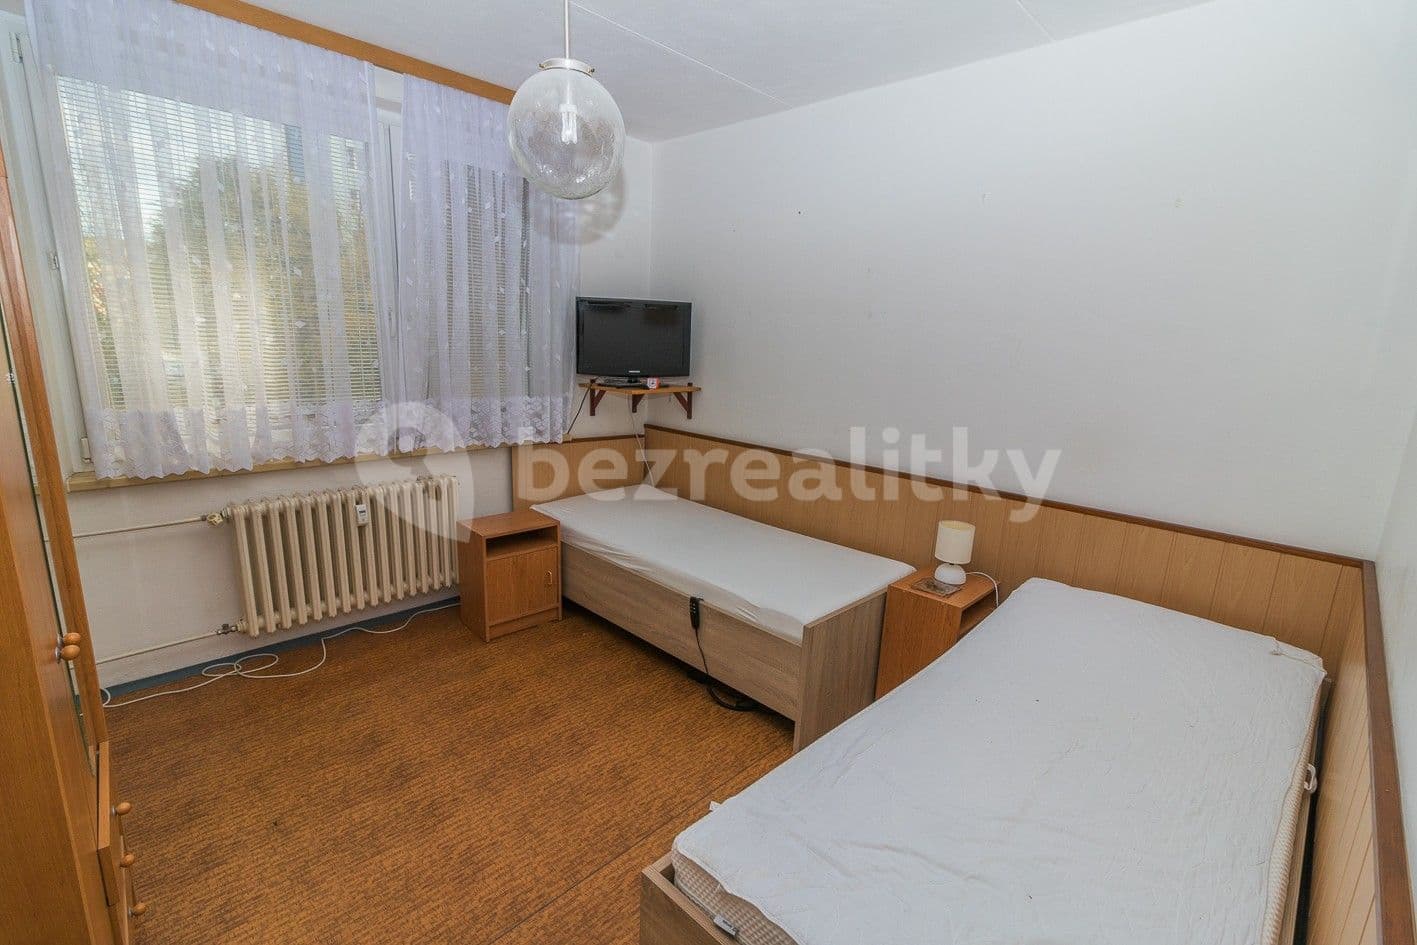 Predaj bytu 3-izbový 70 m², Nádražní, Kuřim, Jihomoravský kraj